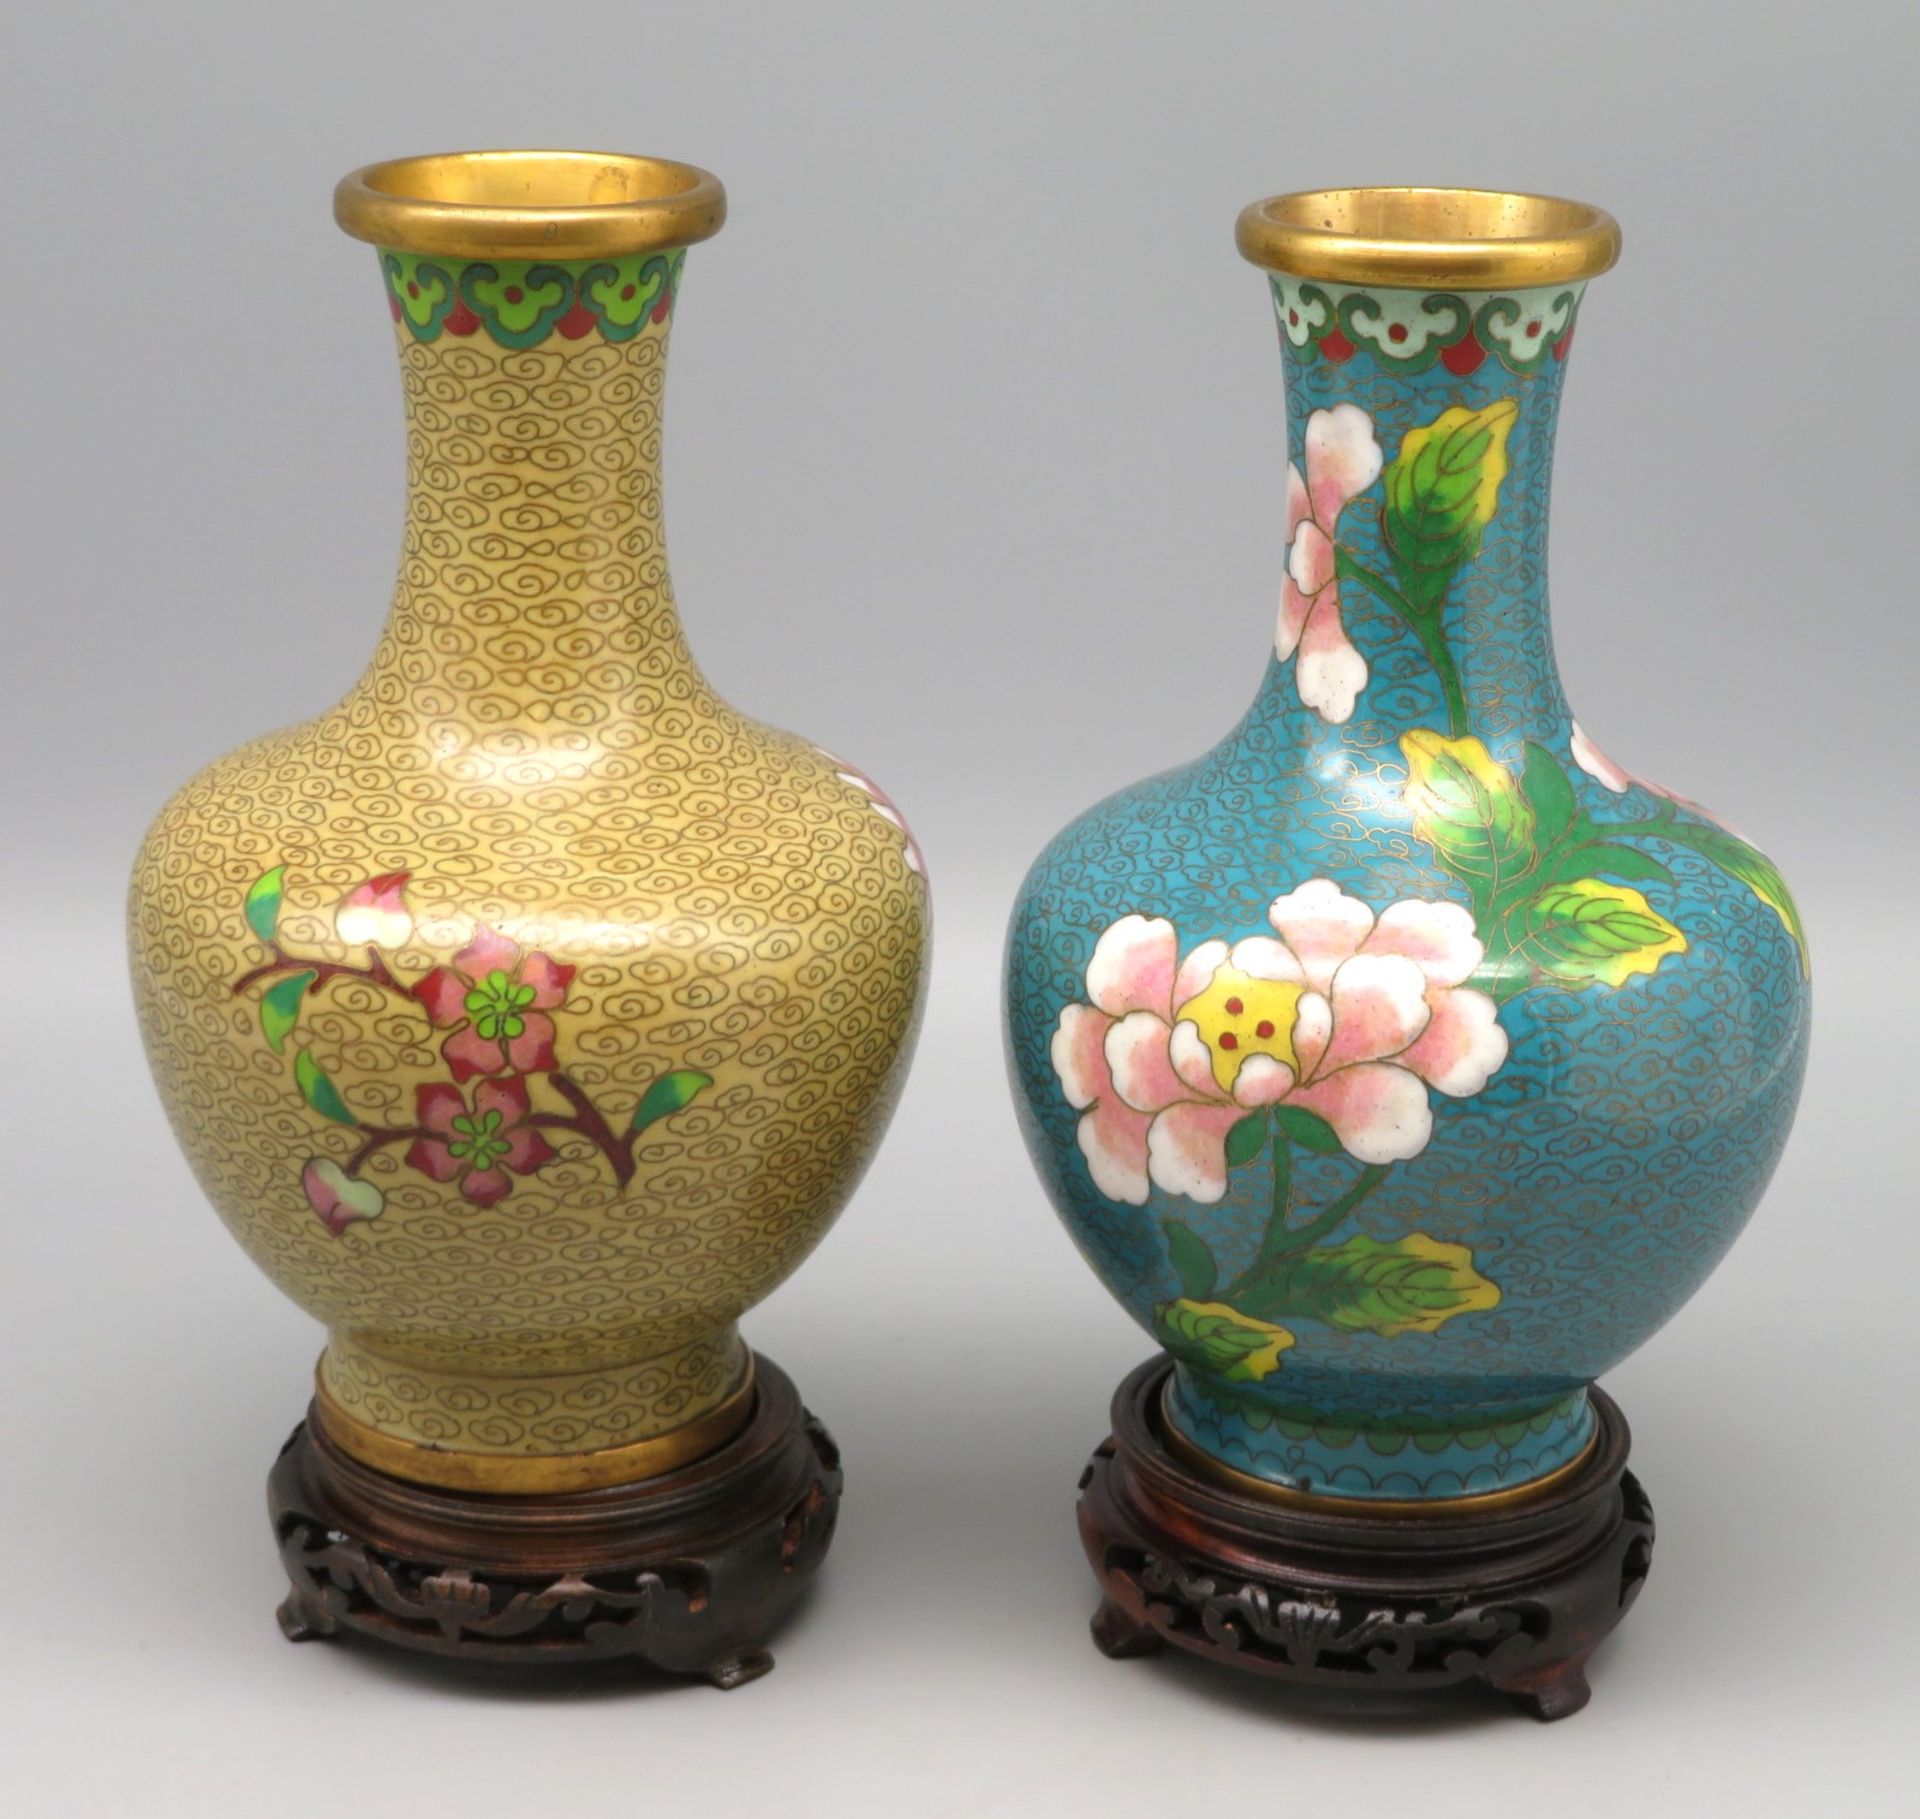 2 Cloisonné Vasen, China, 1. Hälfte 20. Jahrhundert, farbiger Zellenschmelz, geschnitzte Holzsockel - Image 2 of 2